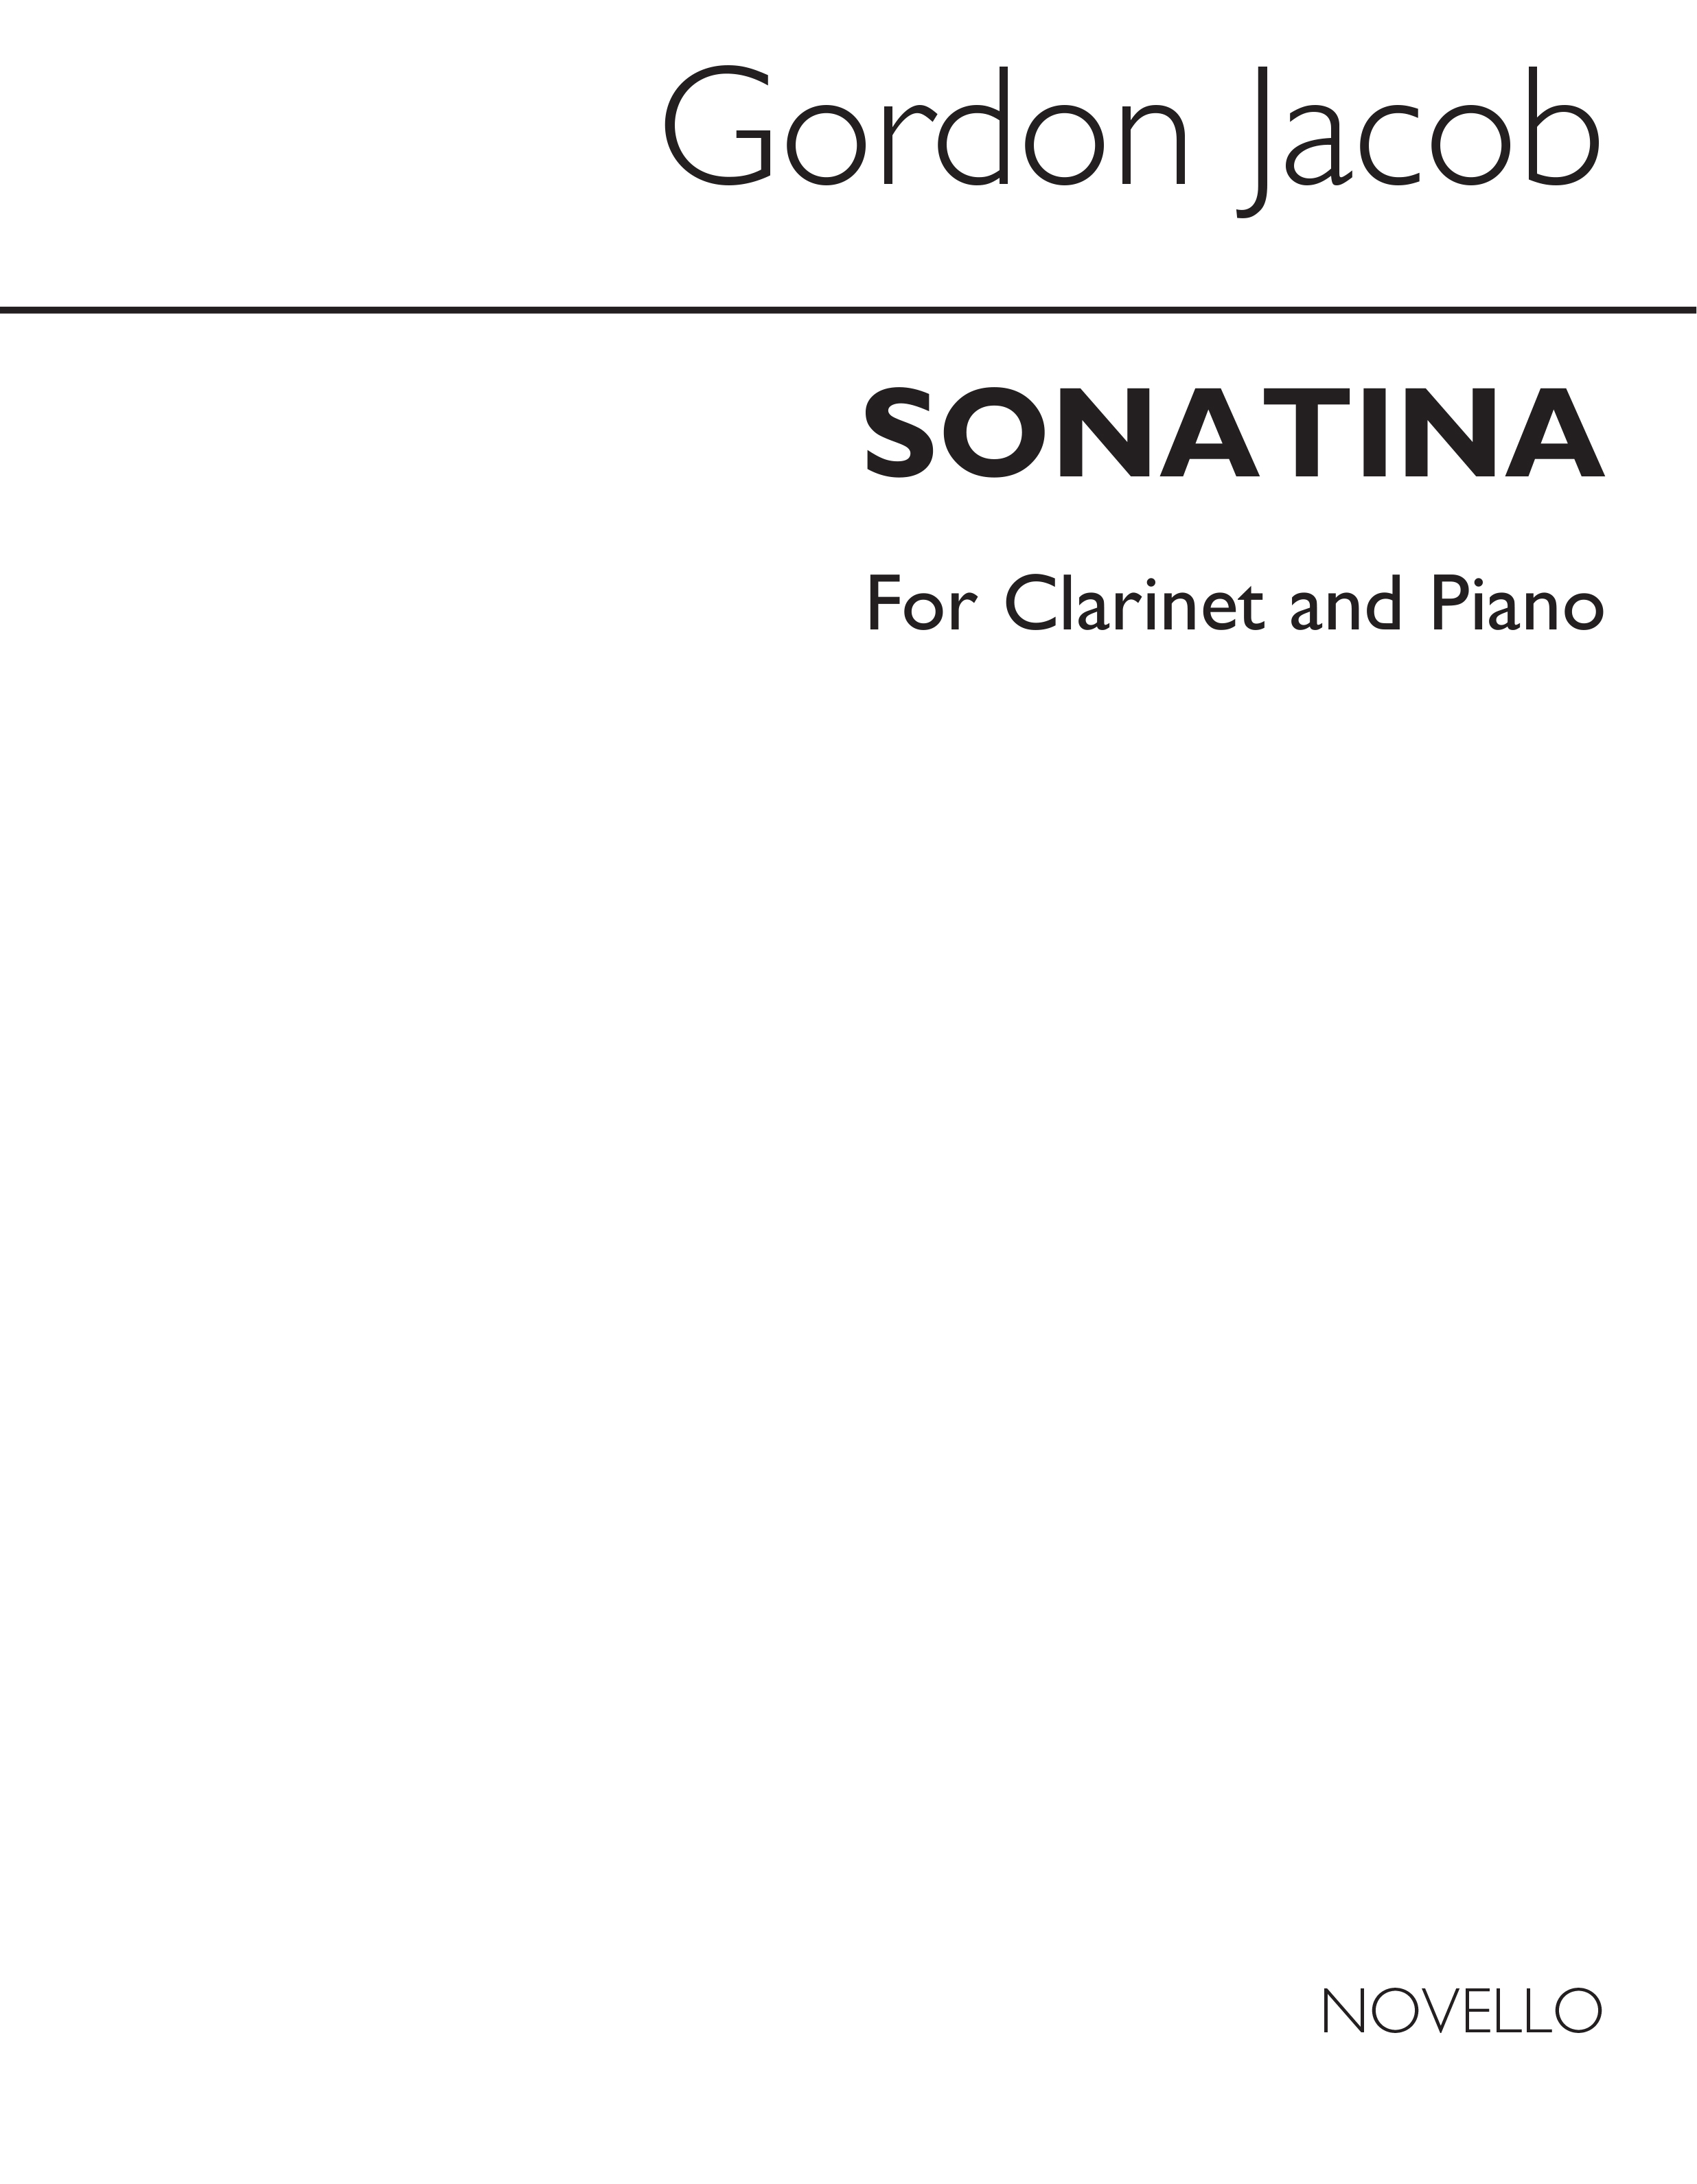 Gordon Jacob: Sonatina For Viola And Piano (Clarinet and Piano)